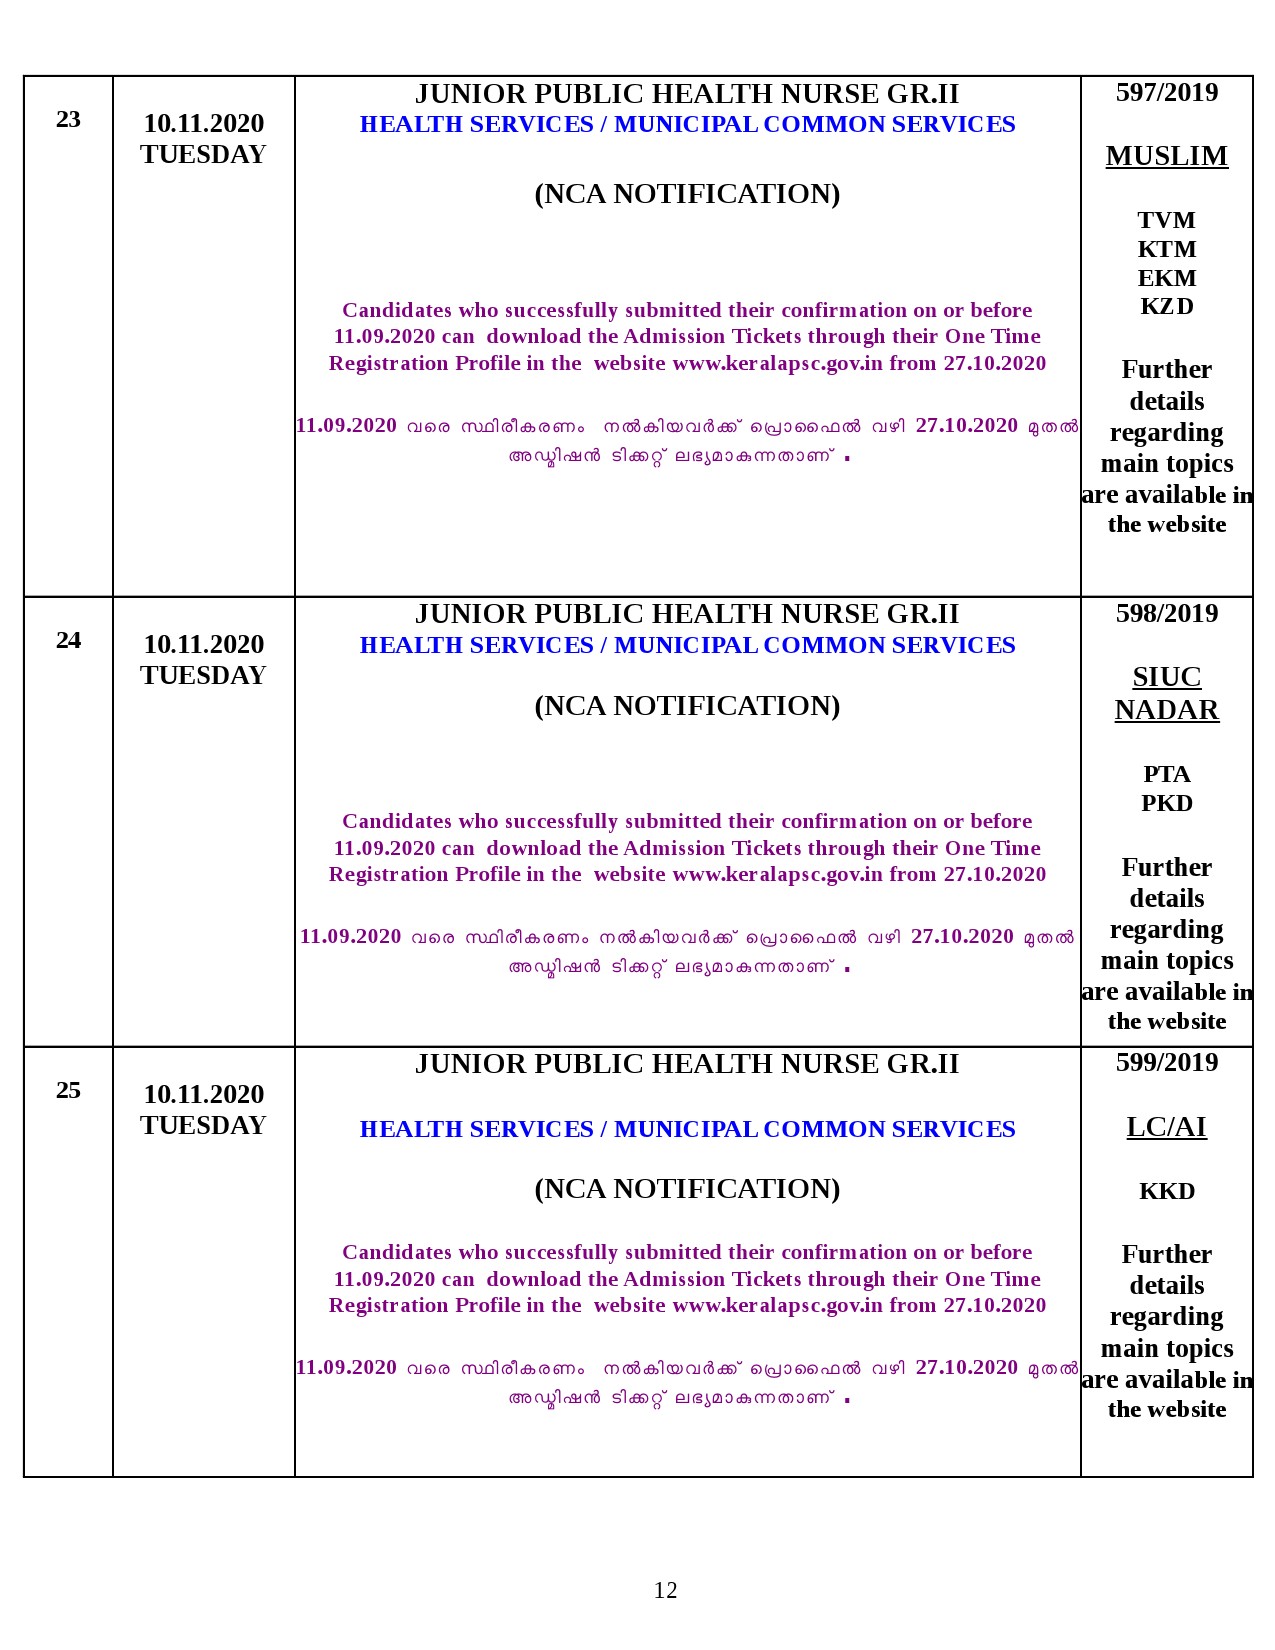 Kerala PSC Final Exam Schedule for November 2020 - Notification Image 12